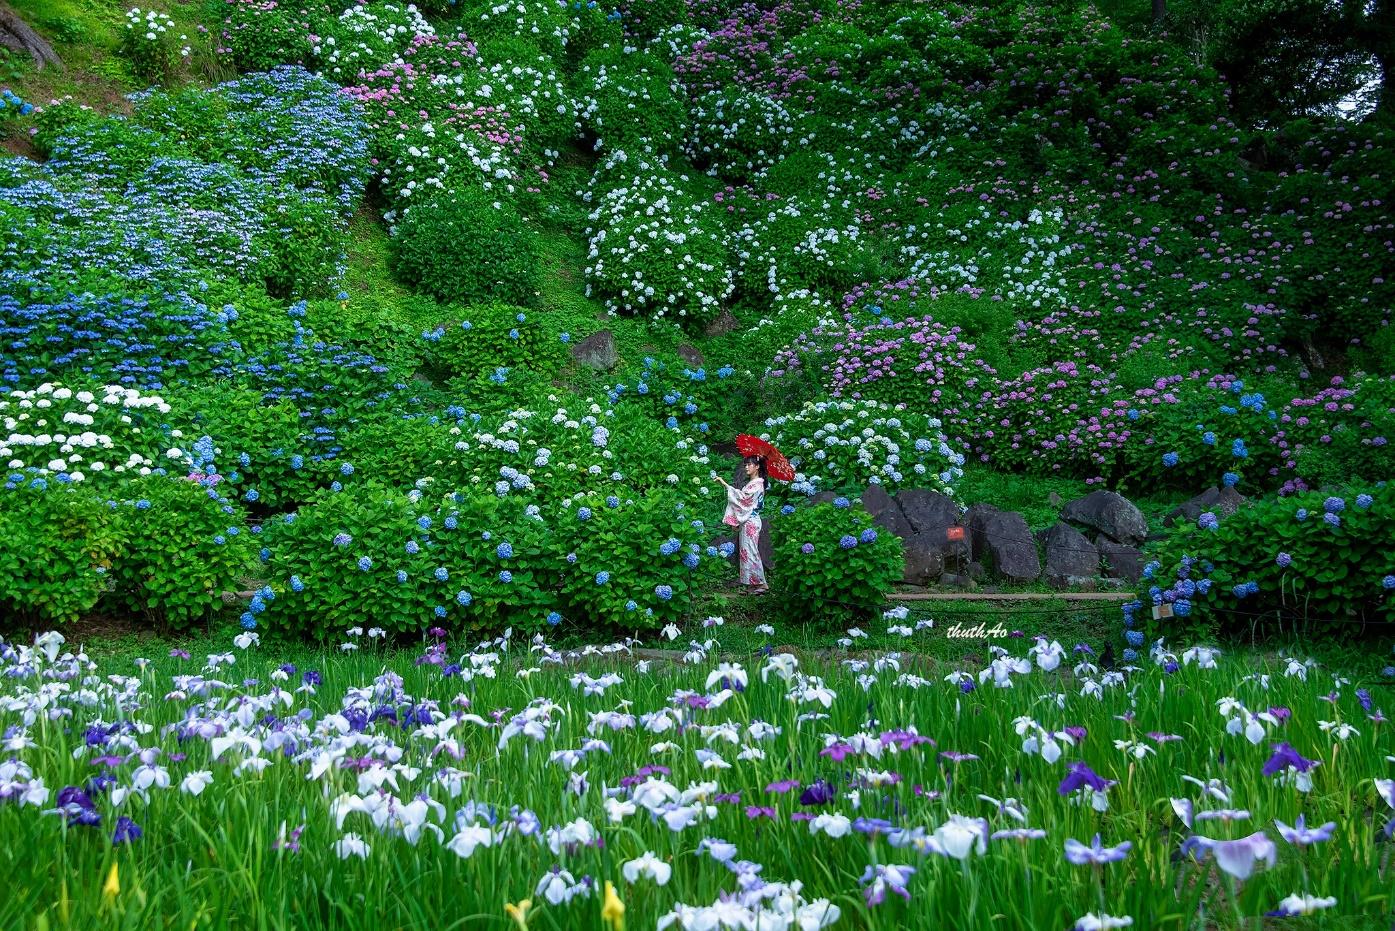 hydrangeas and Japanese iris